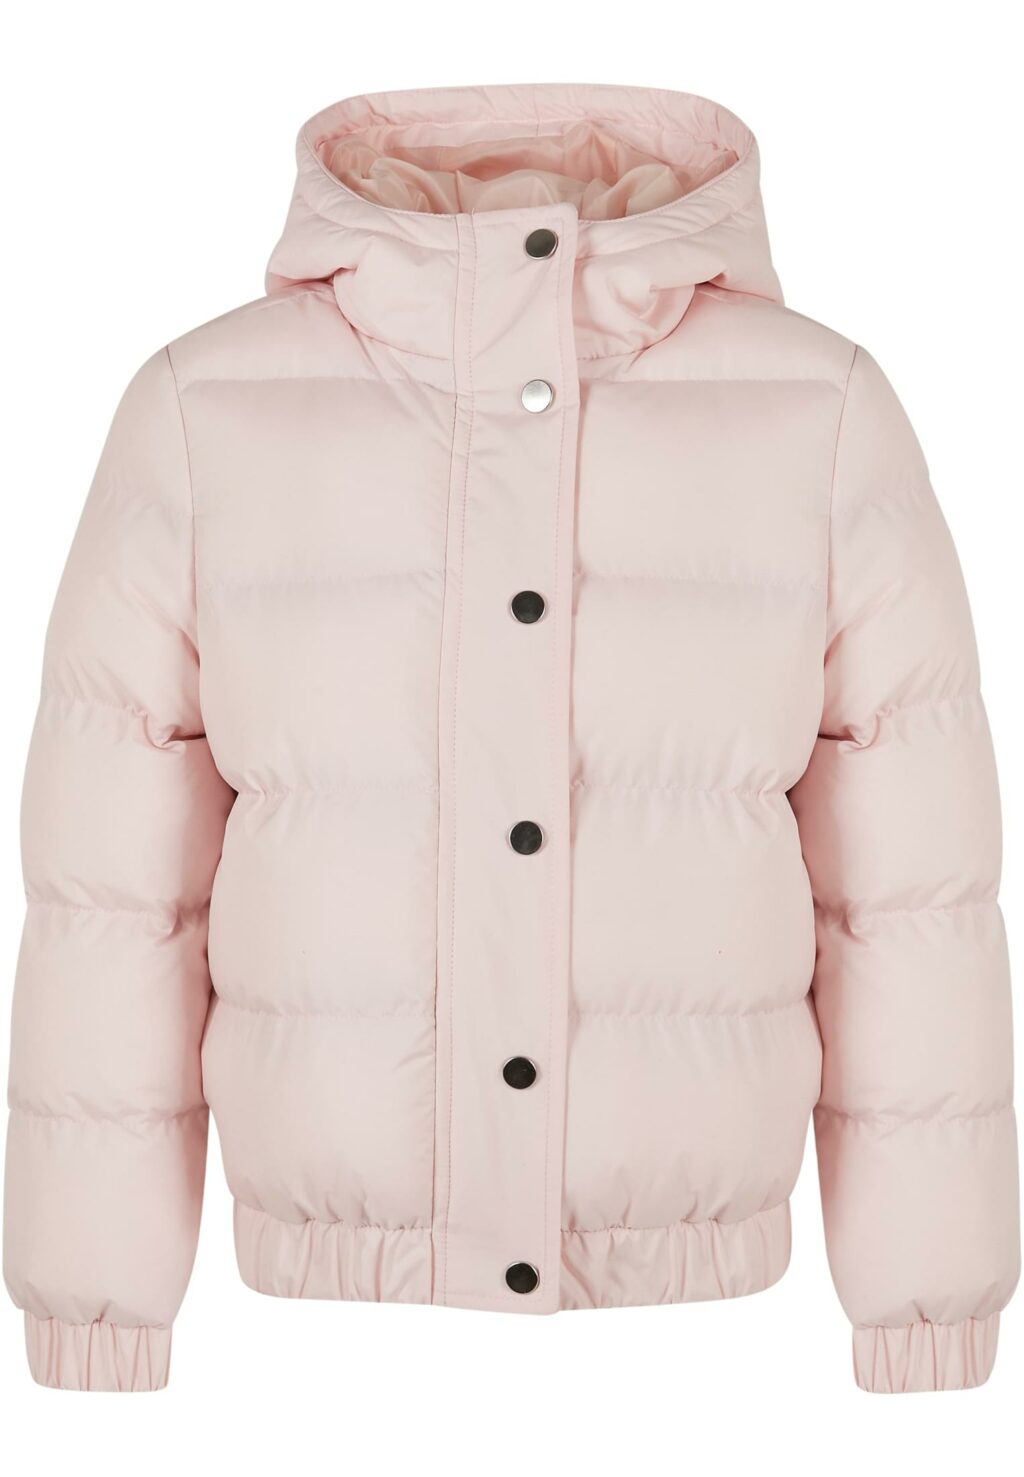 Girls Hooded Puffer Jacket pink UCK1756